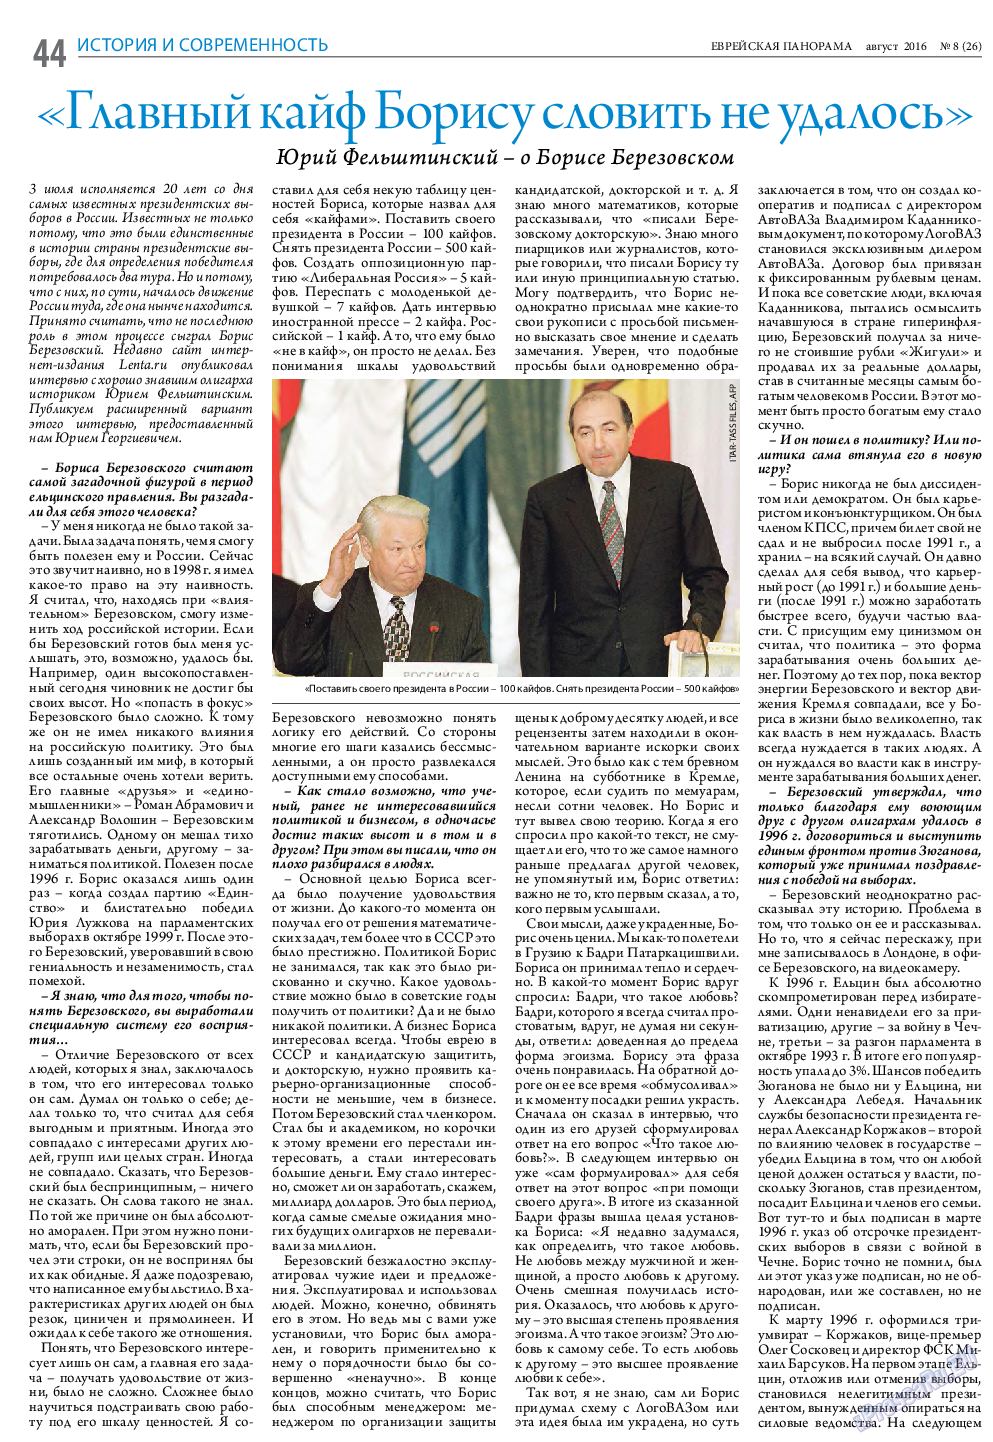 Еврейская панорама, газета. 2016 №8 стр.44